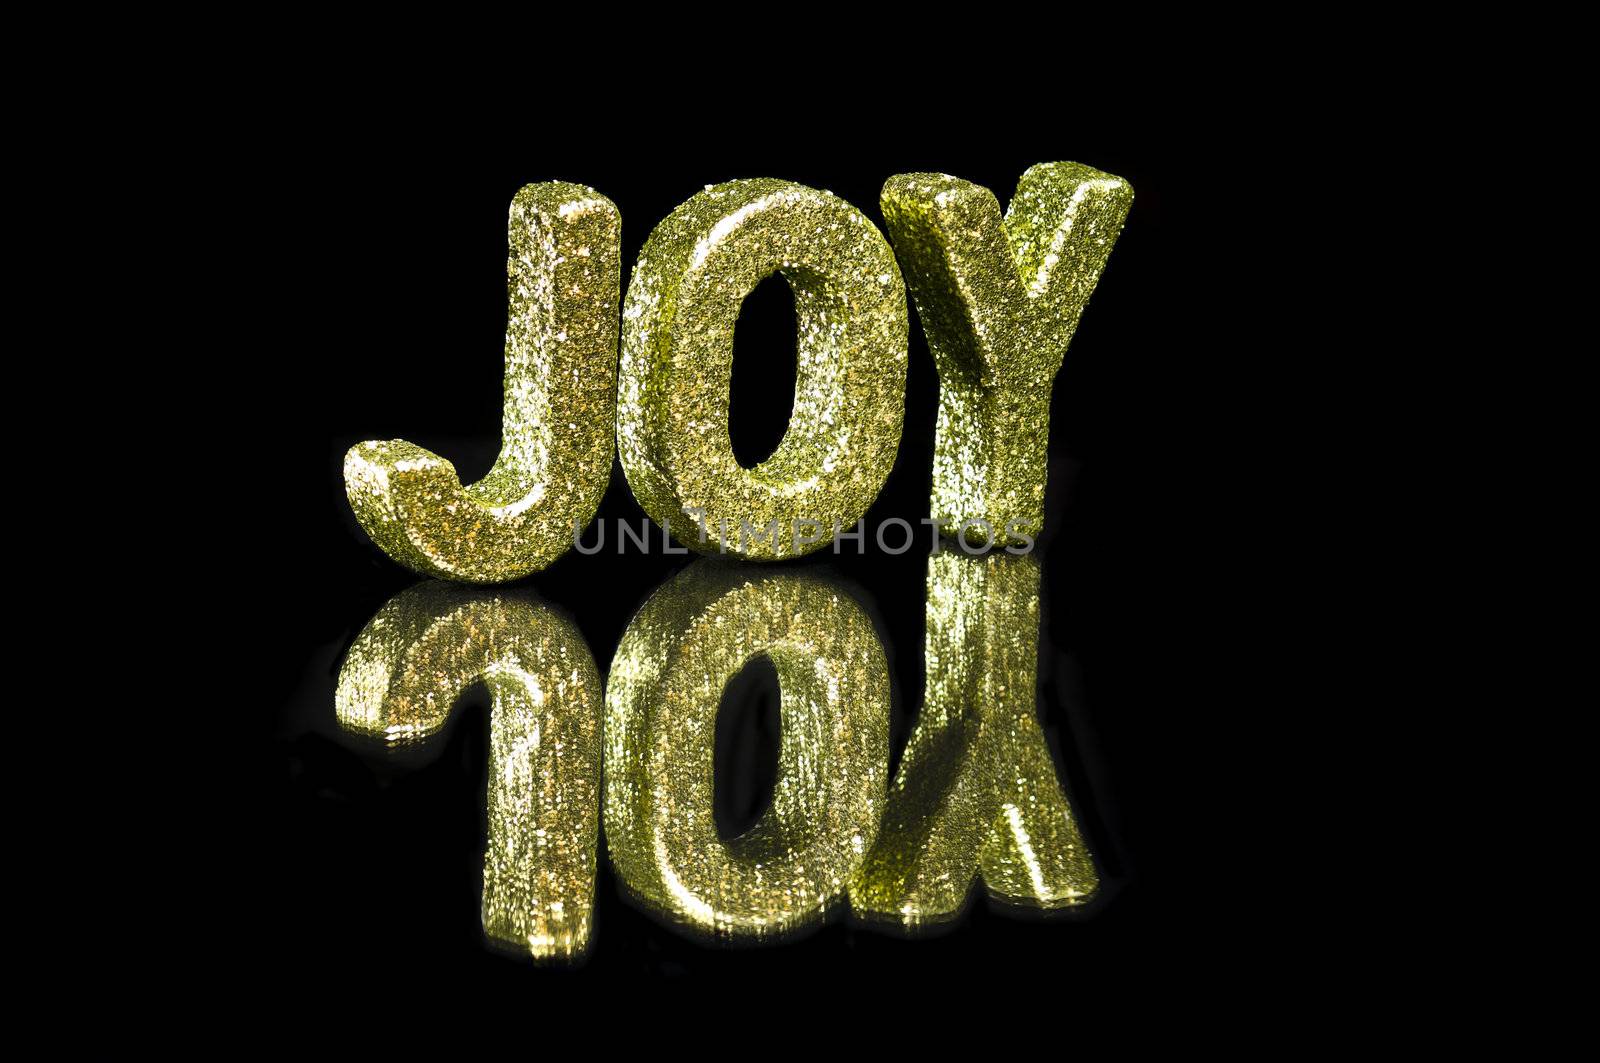 In capital letter written joy, glitter effect over black